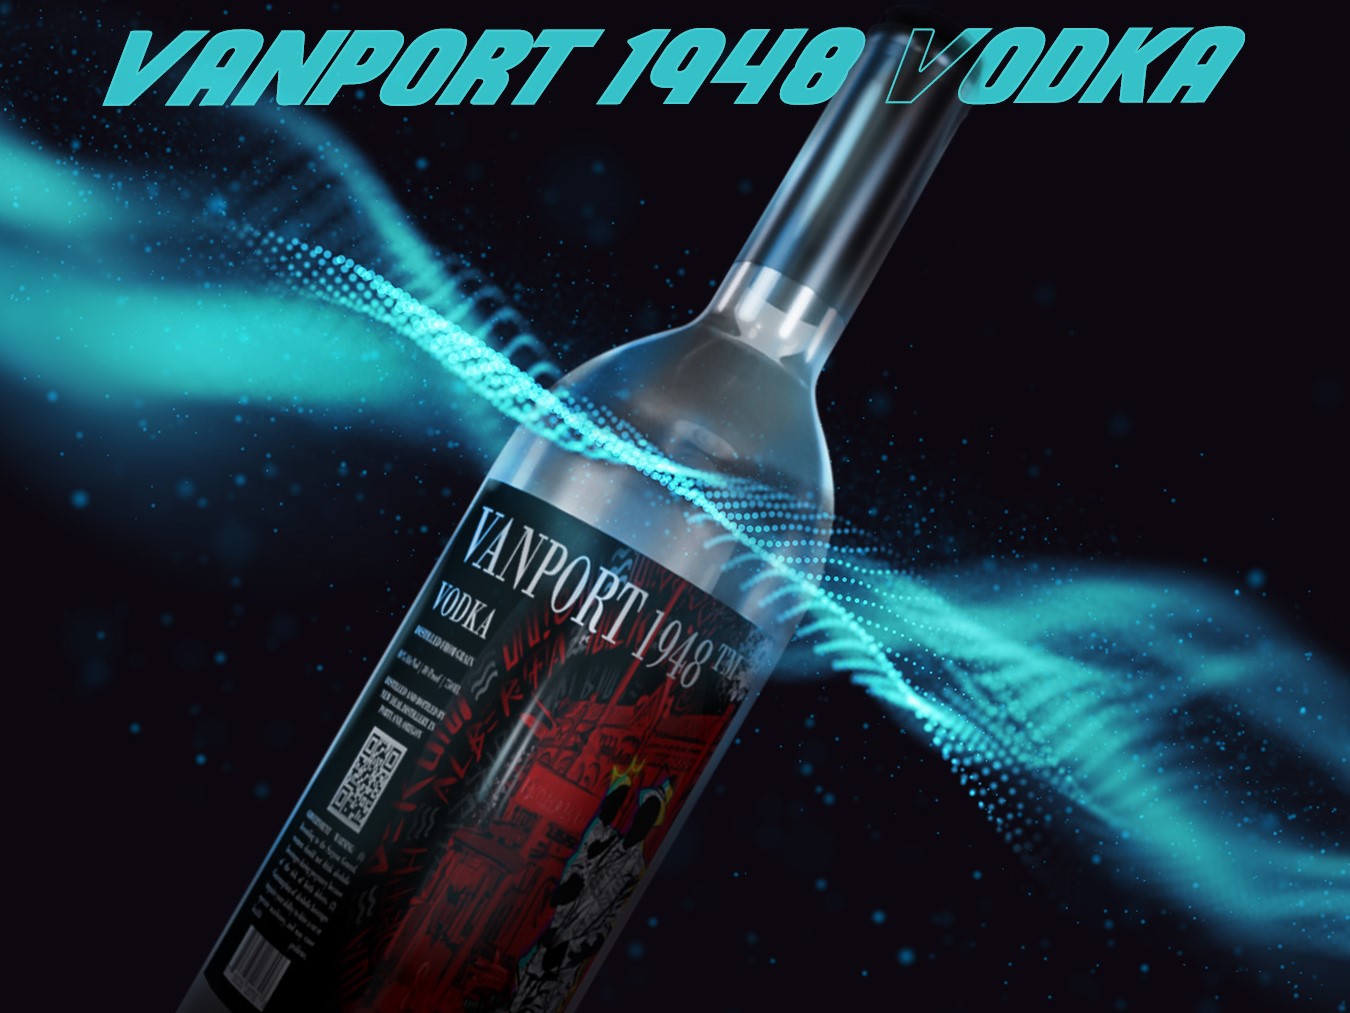 Vanport 1948 Vodka promotional image